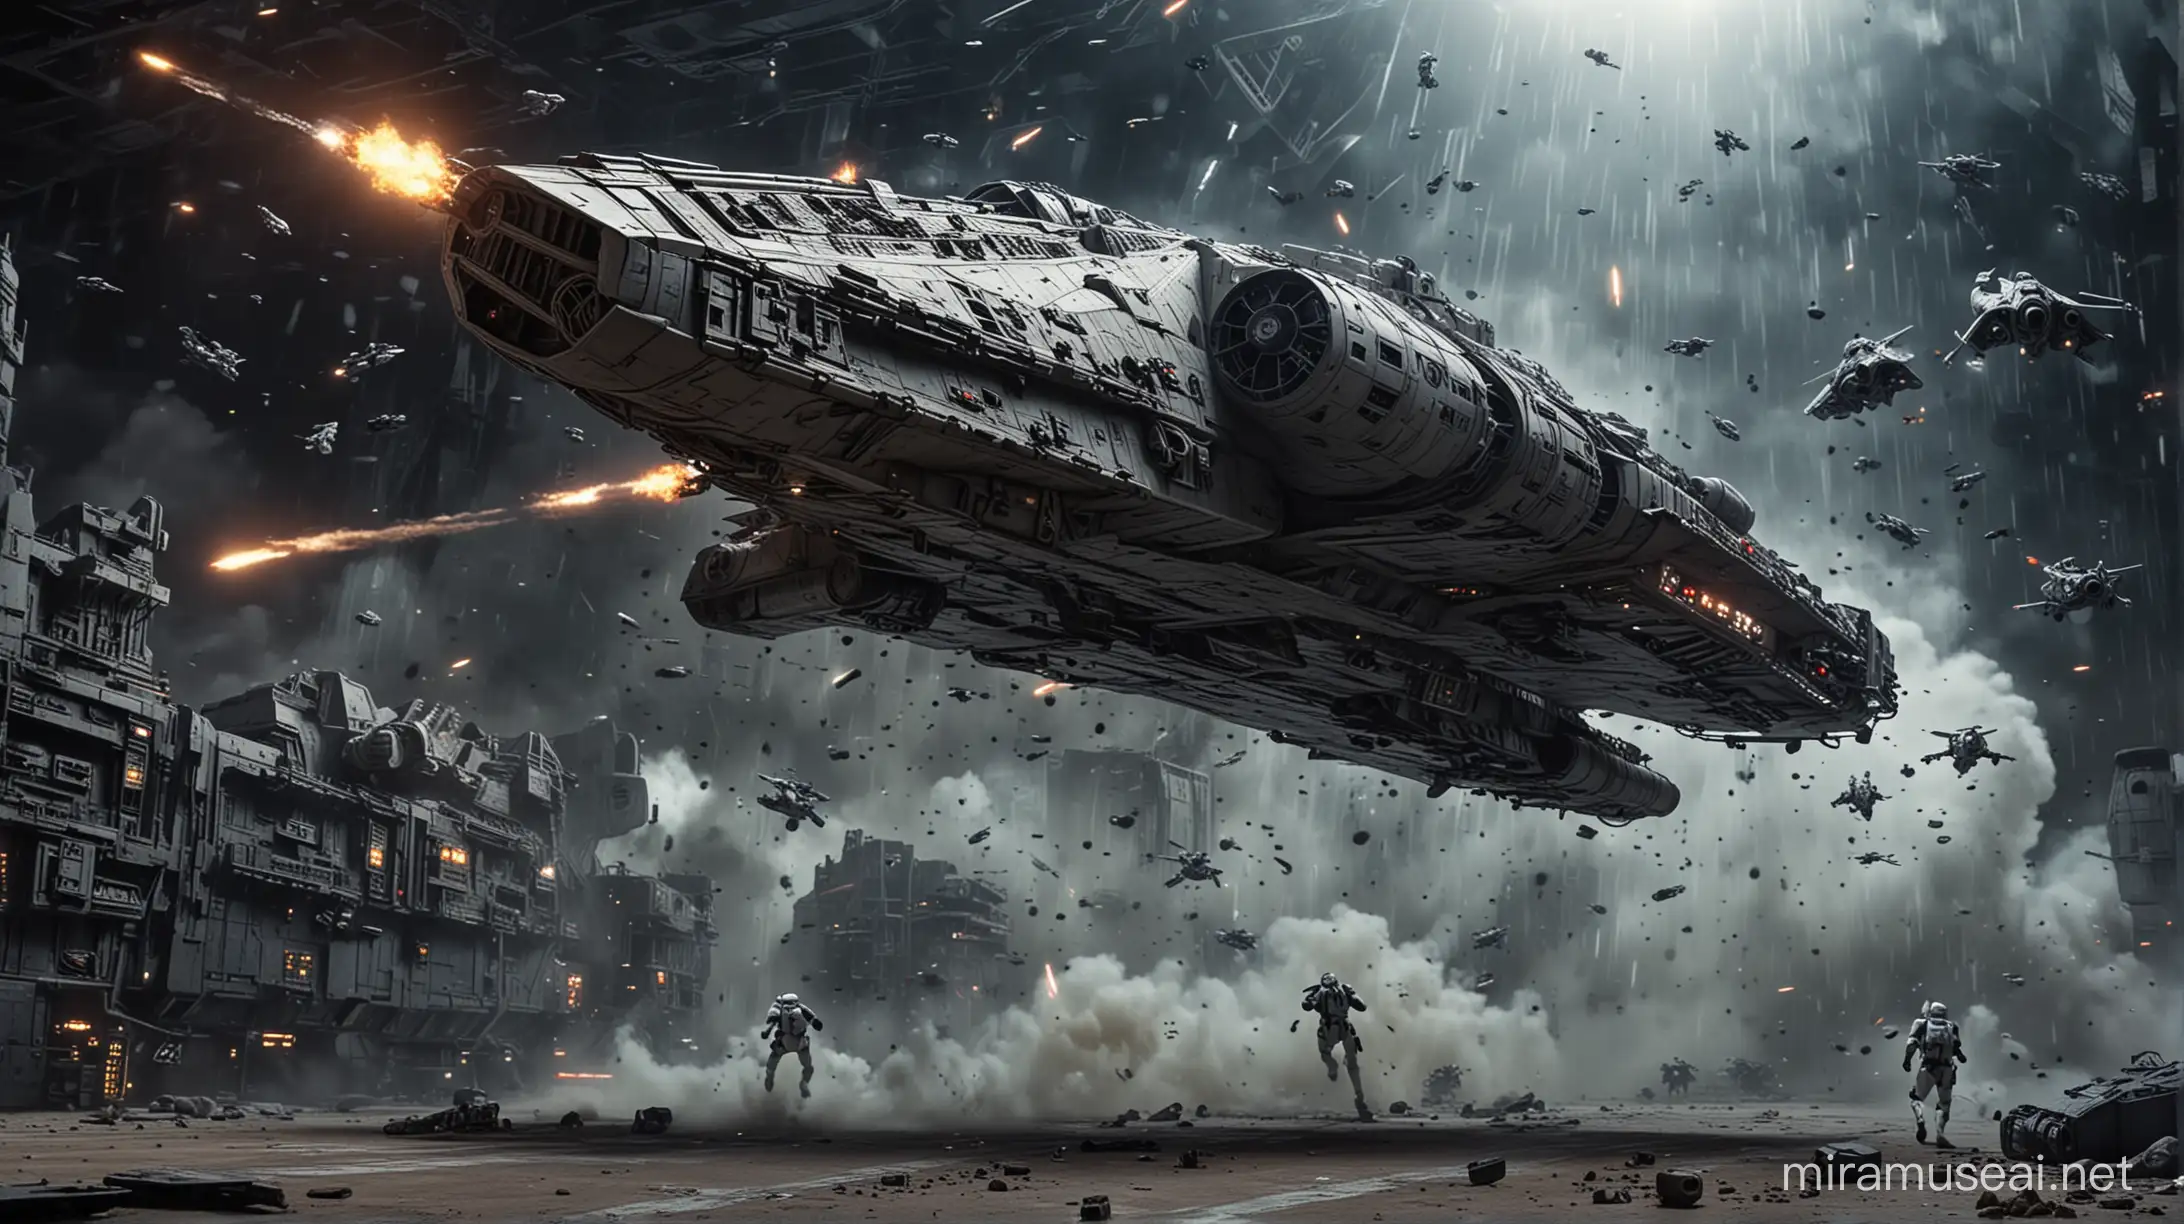 Epic Star Wars Millennium Falcon Battle Cinematic Lights and Blaster Bursts